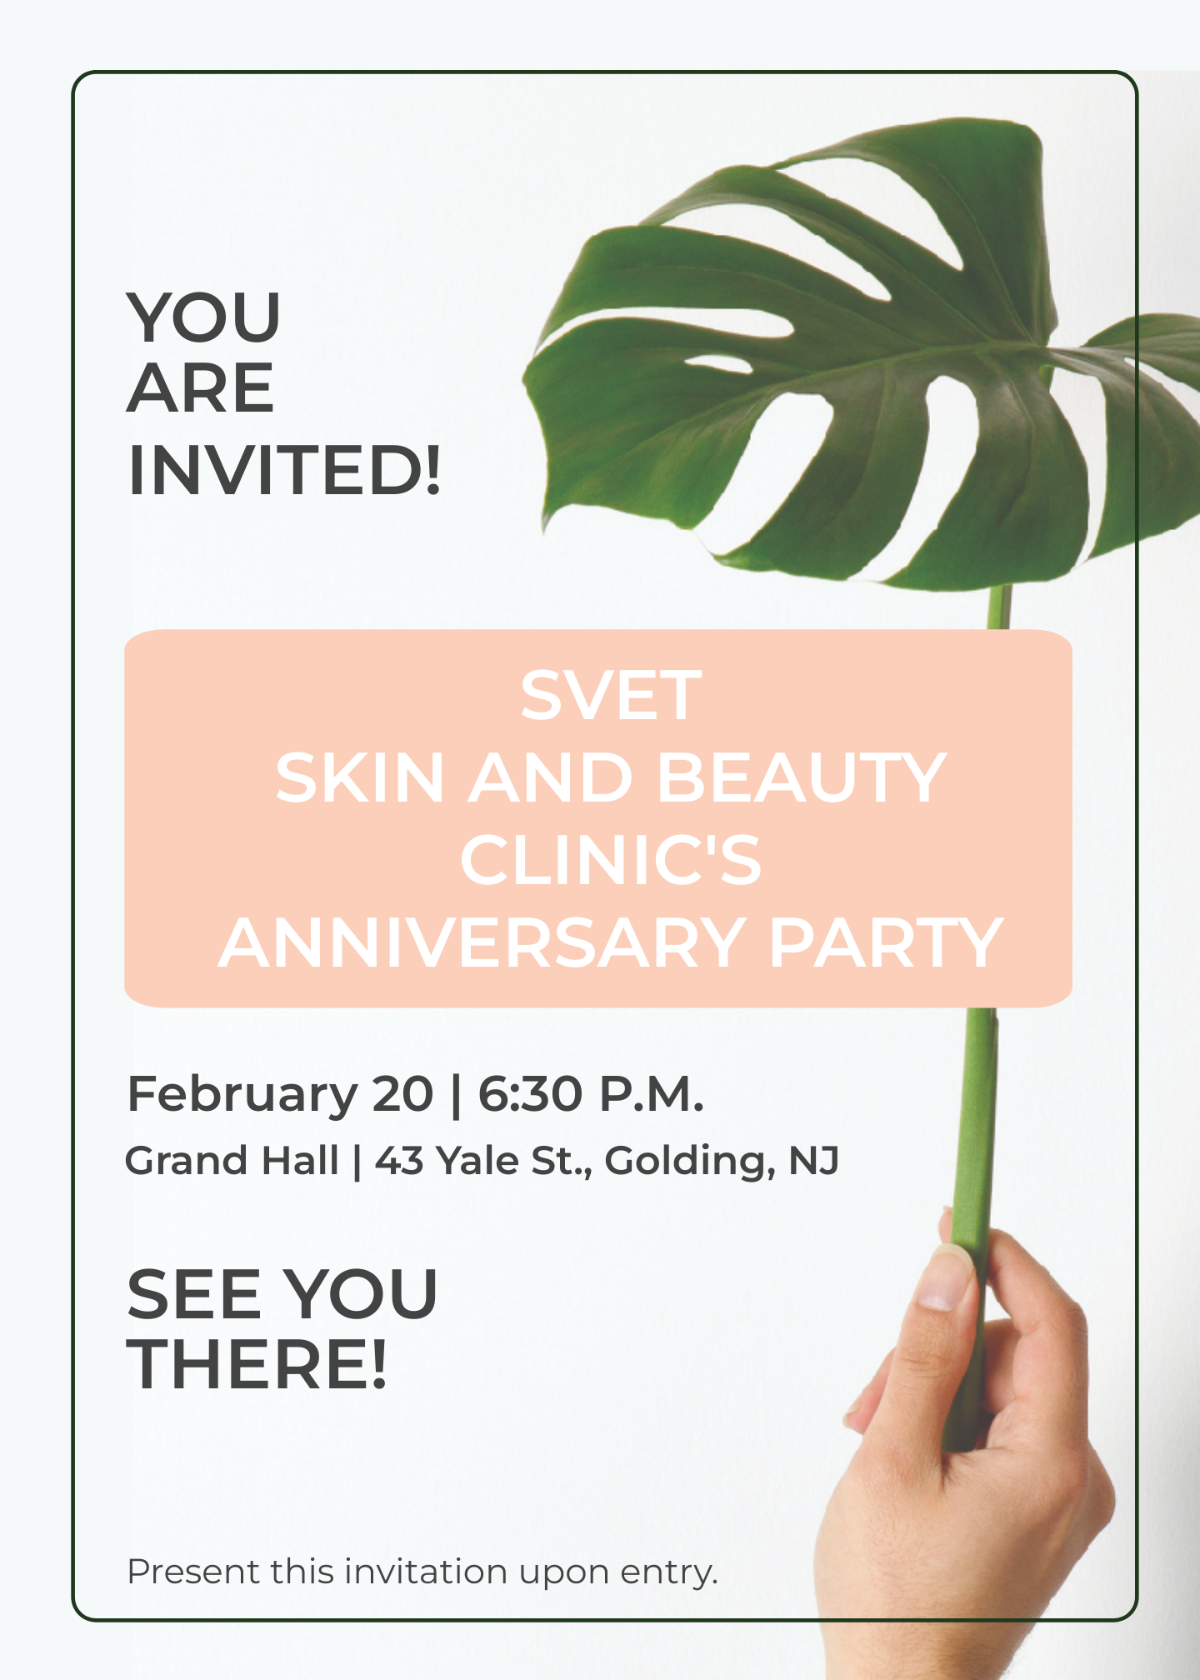 Skin Beauty Clinic Invitation Template